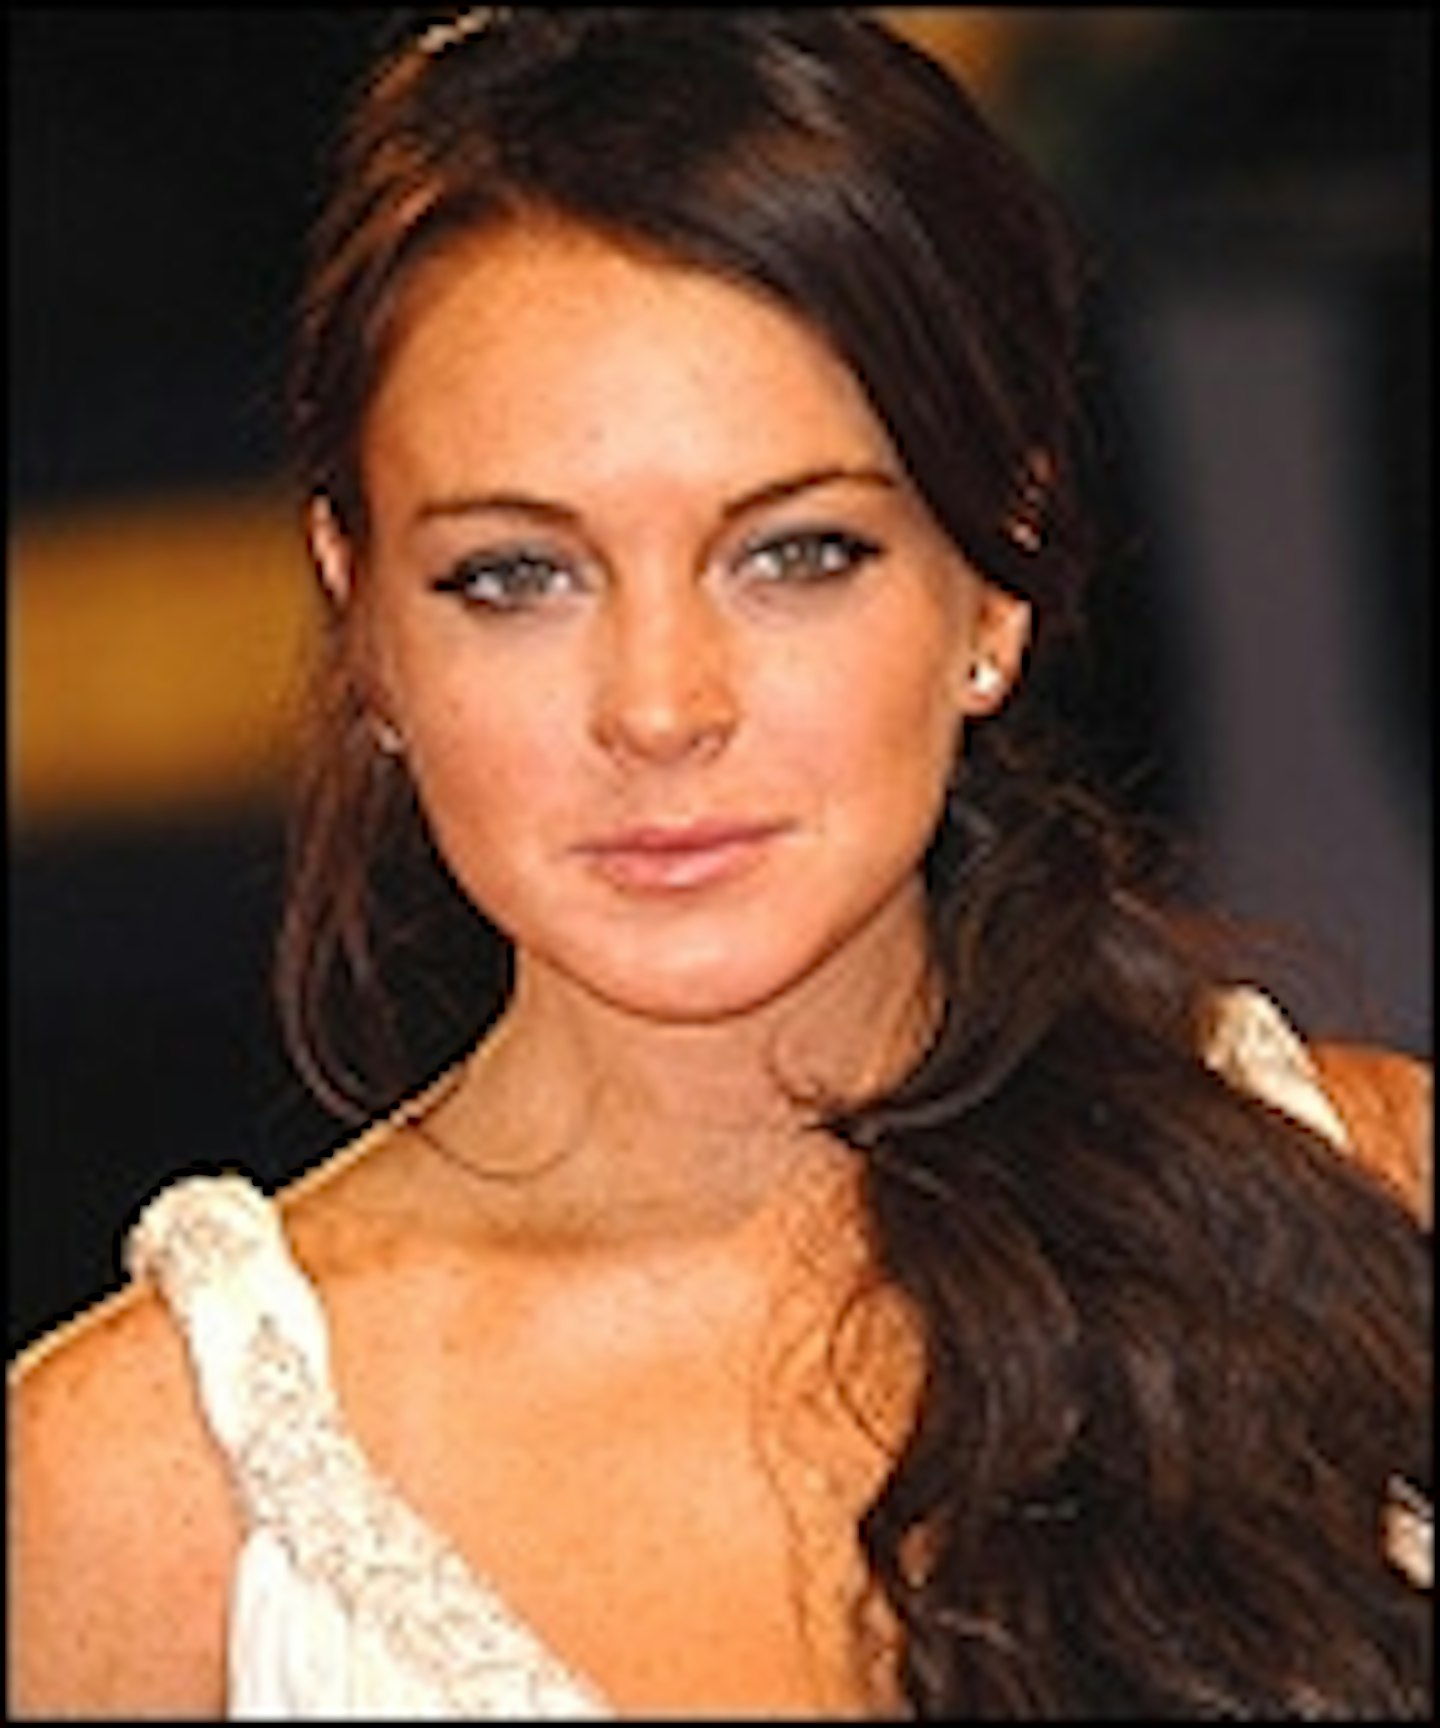 Lindsay Lohan As Elizabeth Taylor?